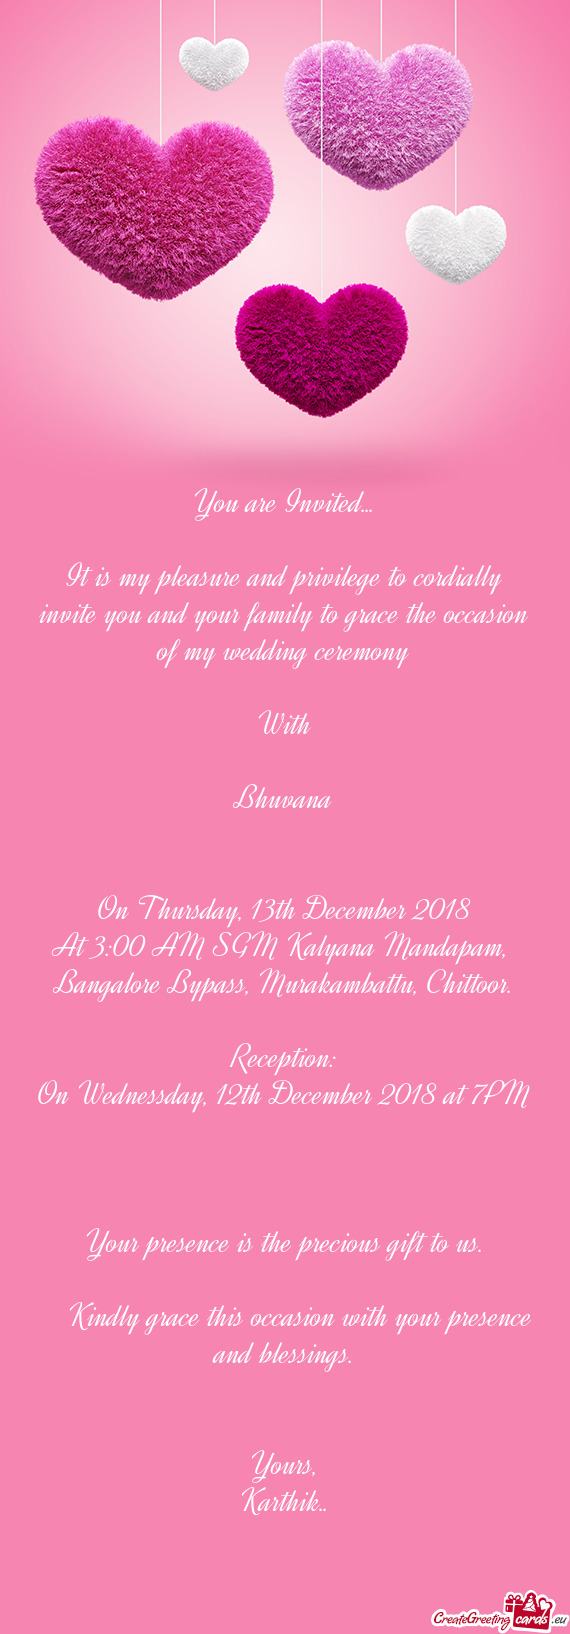 My wedding ceremony
 
 With
 
 Bhuvana
 
 
 On Thursday